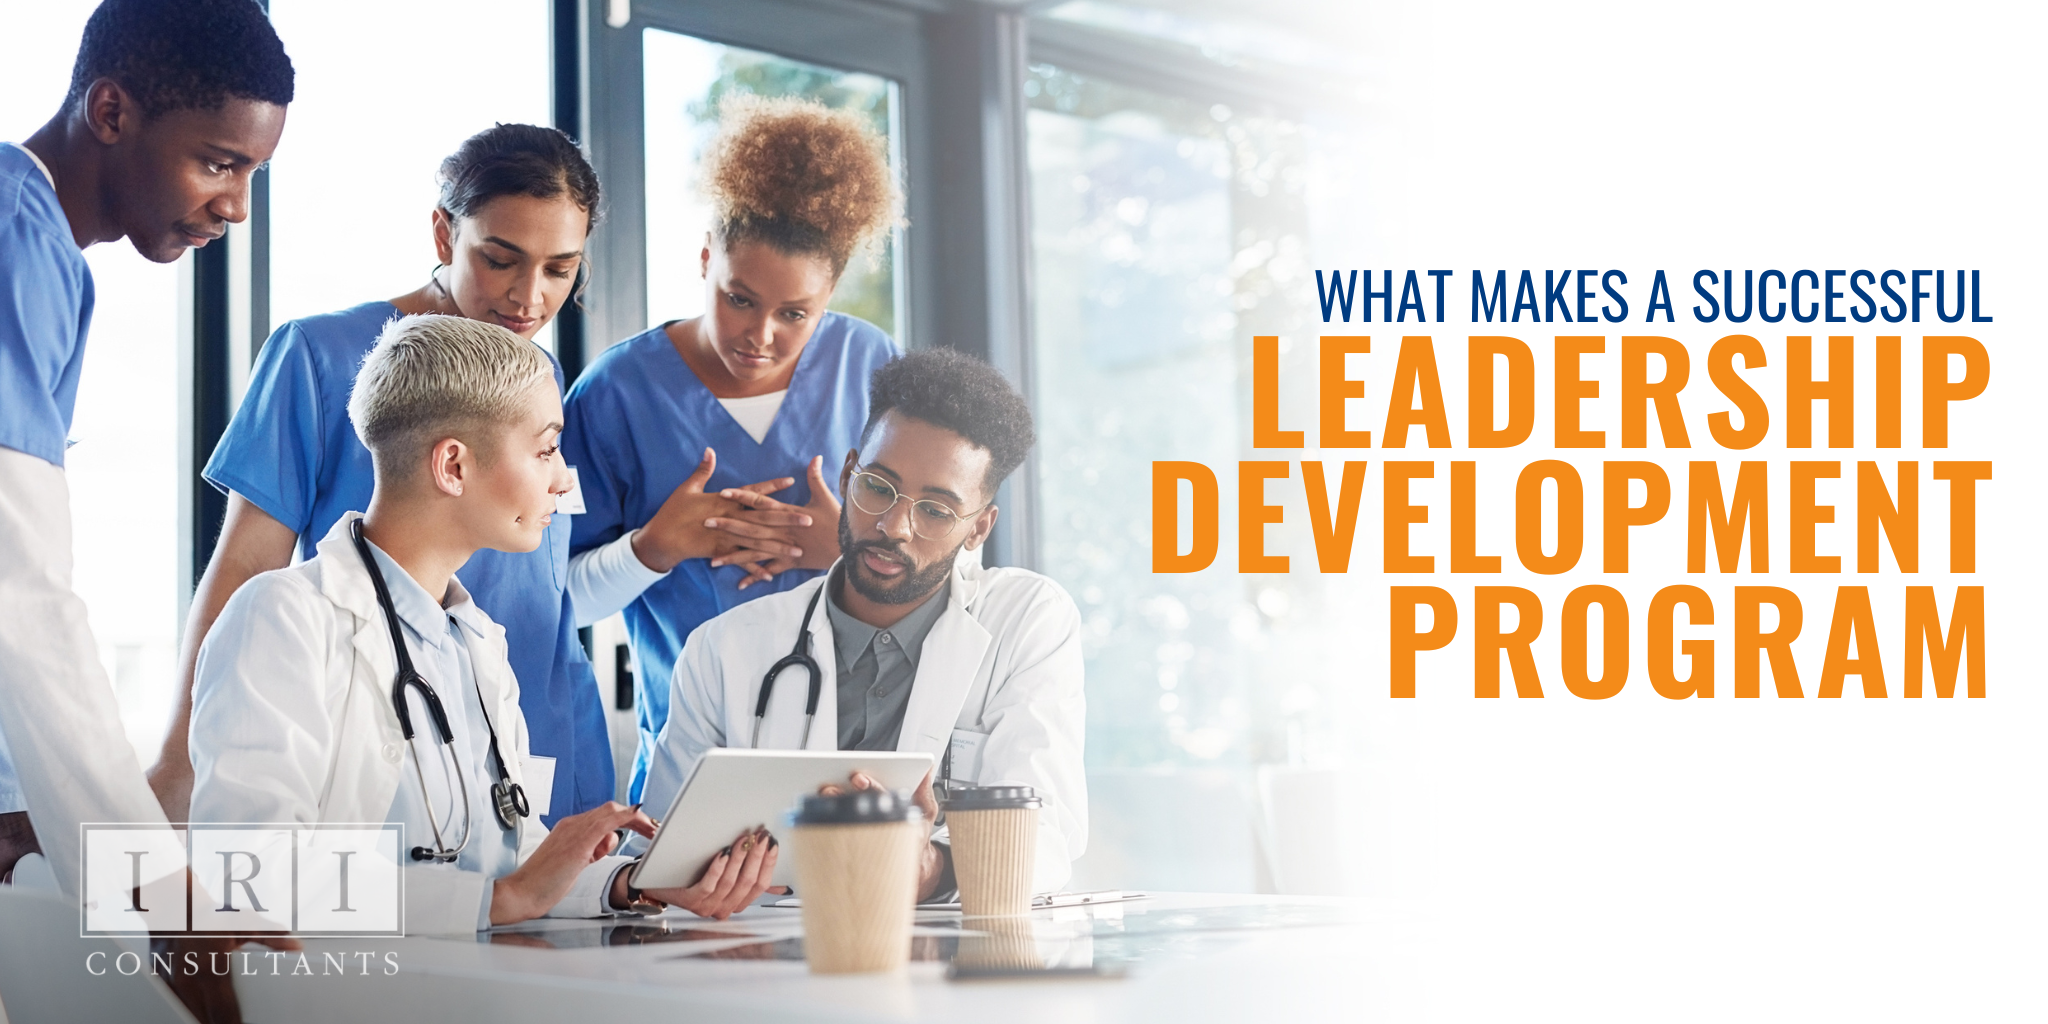 an effective leadership development program